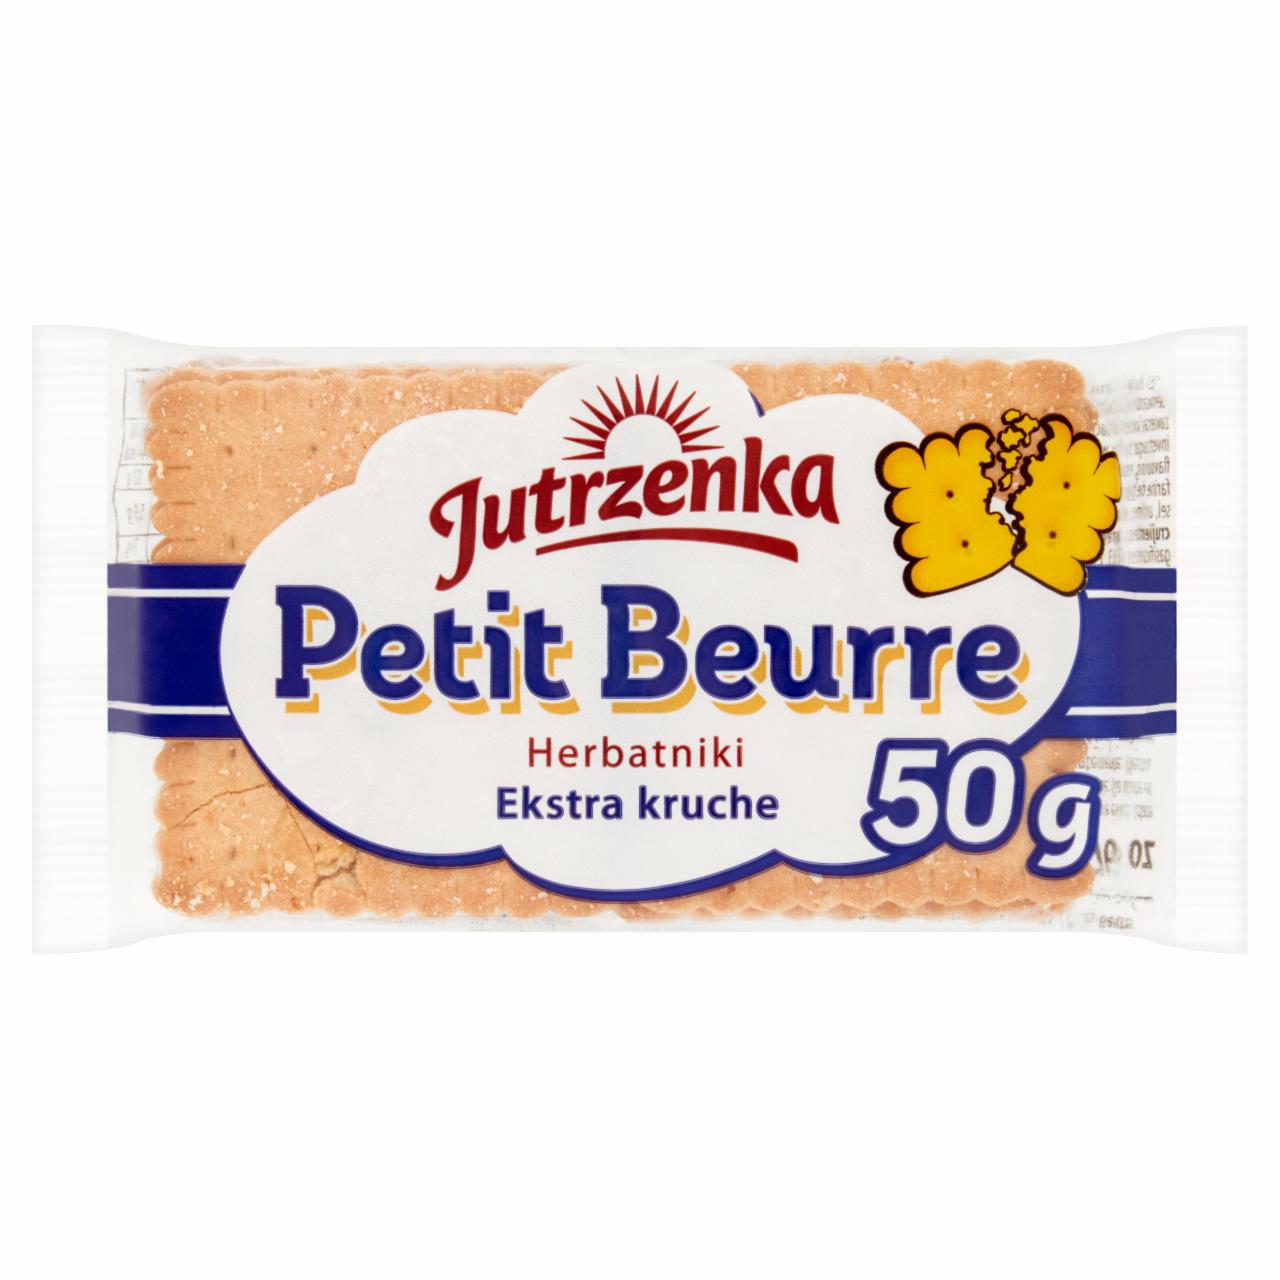 Zdjęcia - Jutrzenka Petit Beurre Herbatniki ekstra kruche 50 g